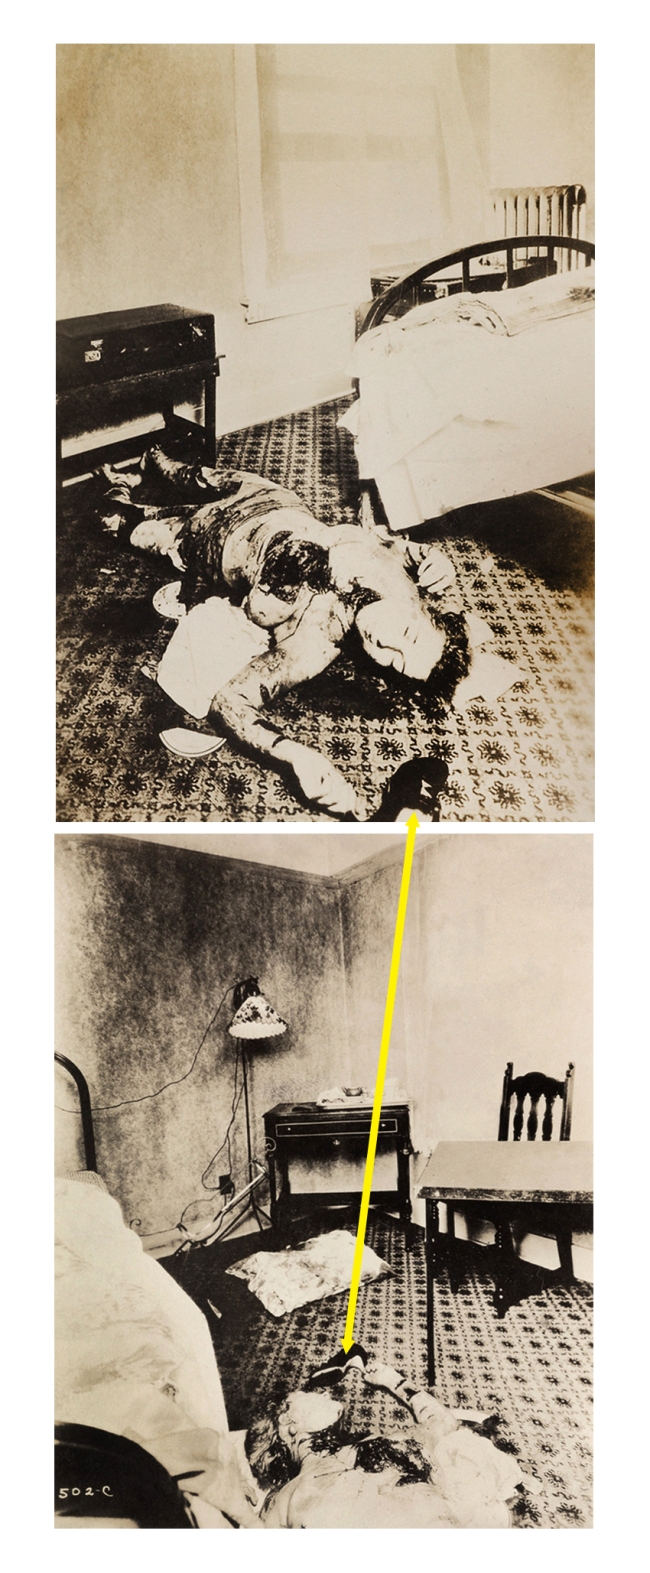 Weegee (Arthur Fellig) (American, 1899-1968) 'Untitled [Crime scene]' c. 1930 compilation of two Weegee crime scene photographs